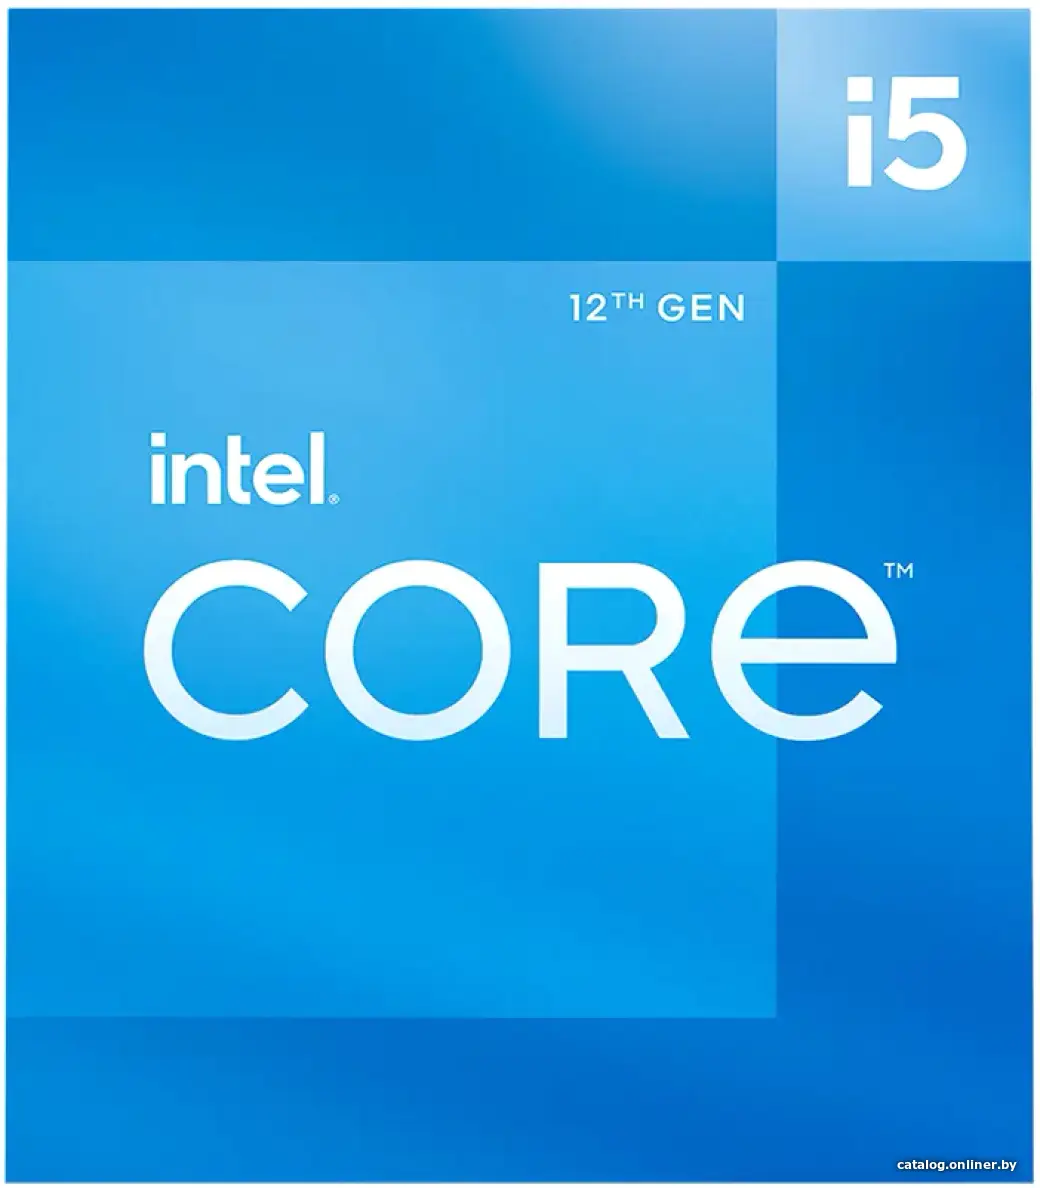 Купить Процессор Intel Core i5-12400F, цена, опт и розница